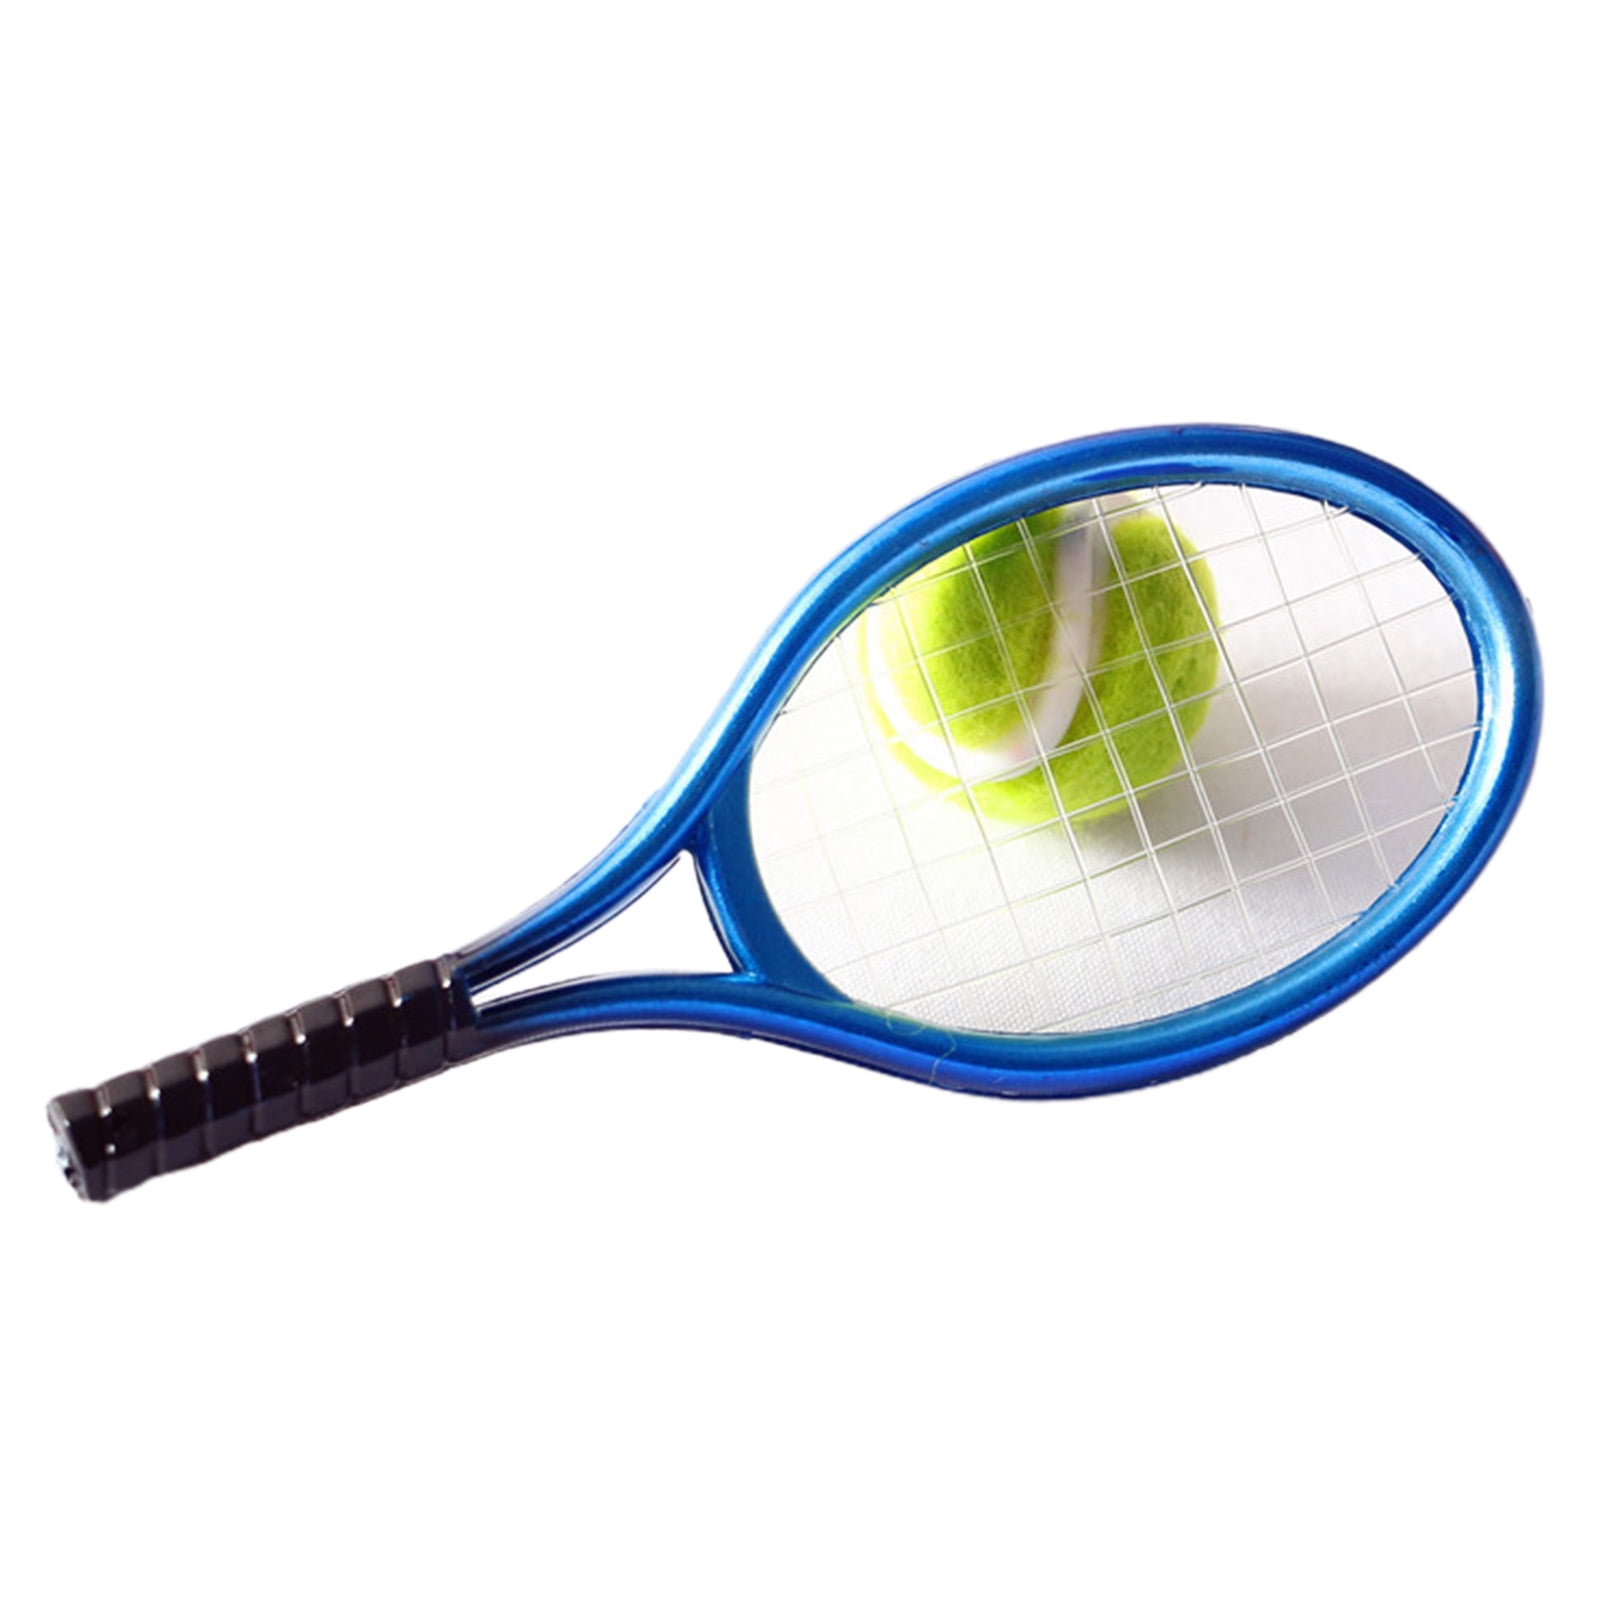 Shulemin Simulation Mini Tennis Racket Ball Model Set Dollhouse Accessories,Blue 9x3.8x0.65cm